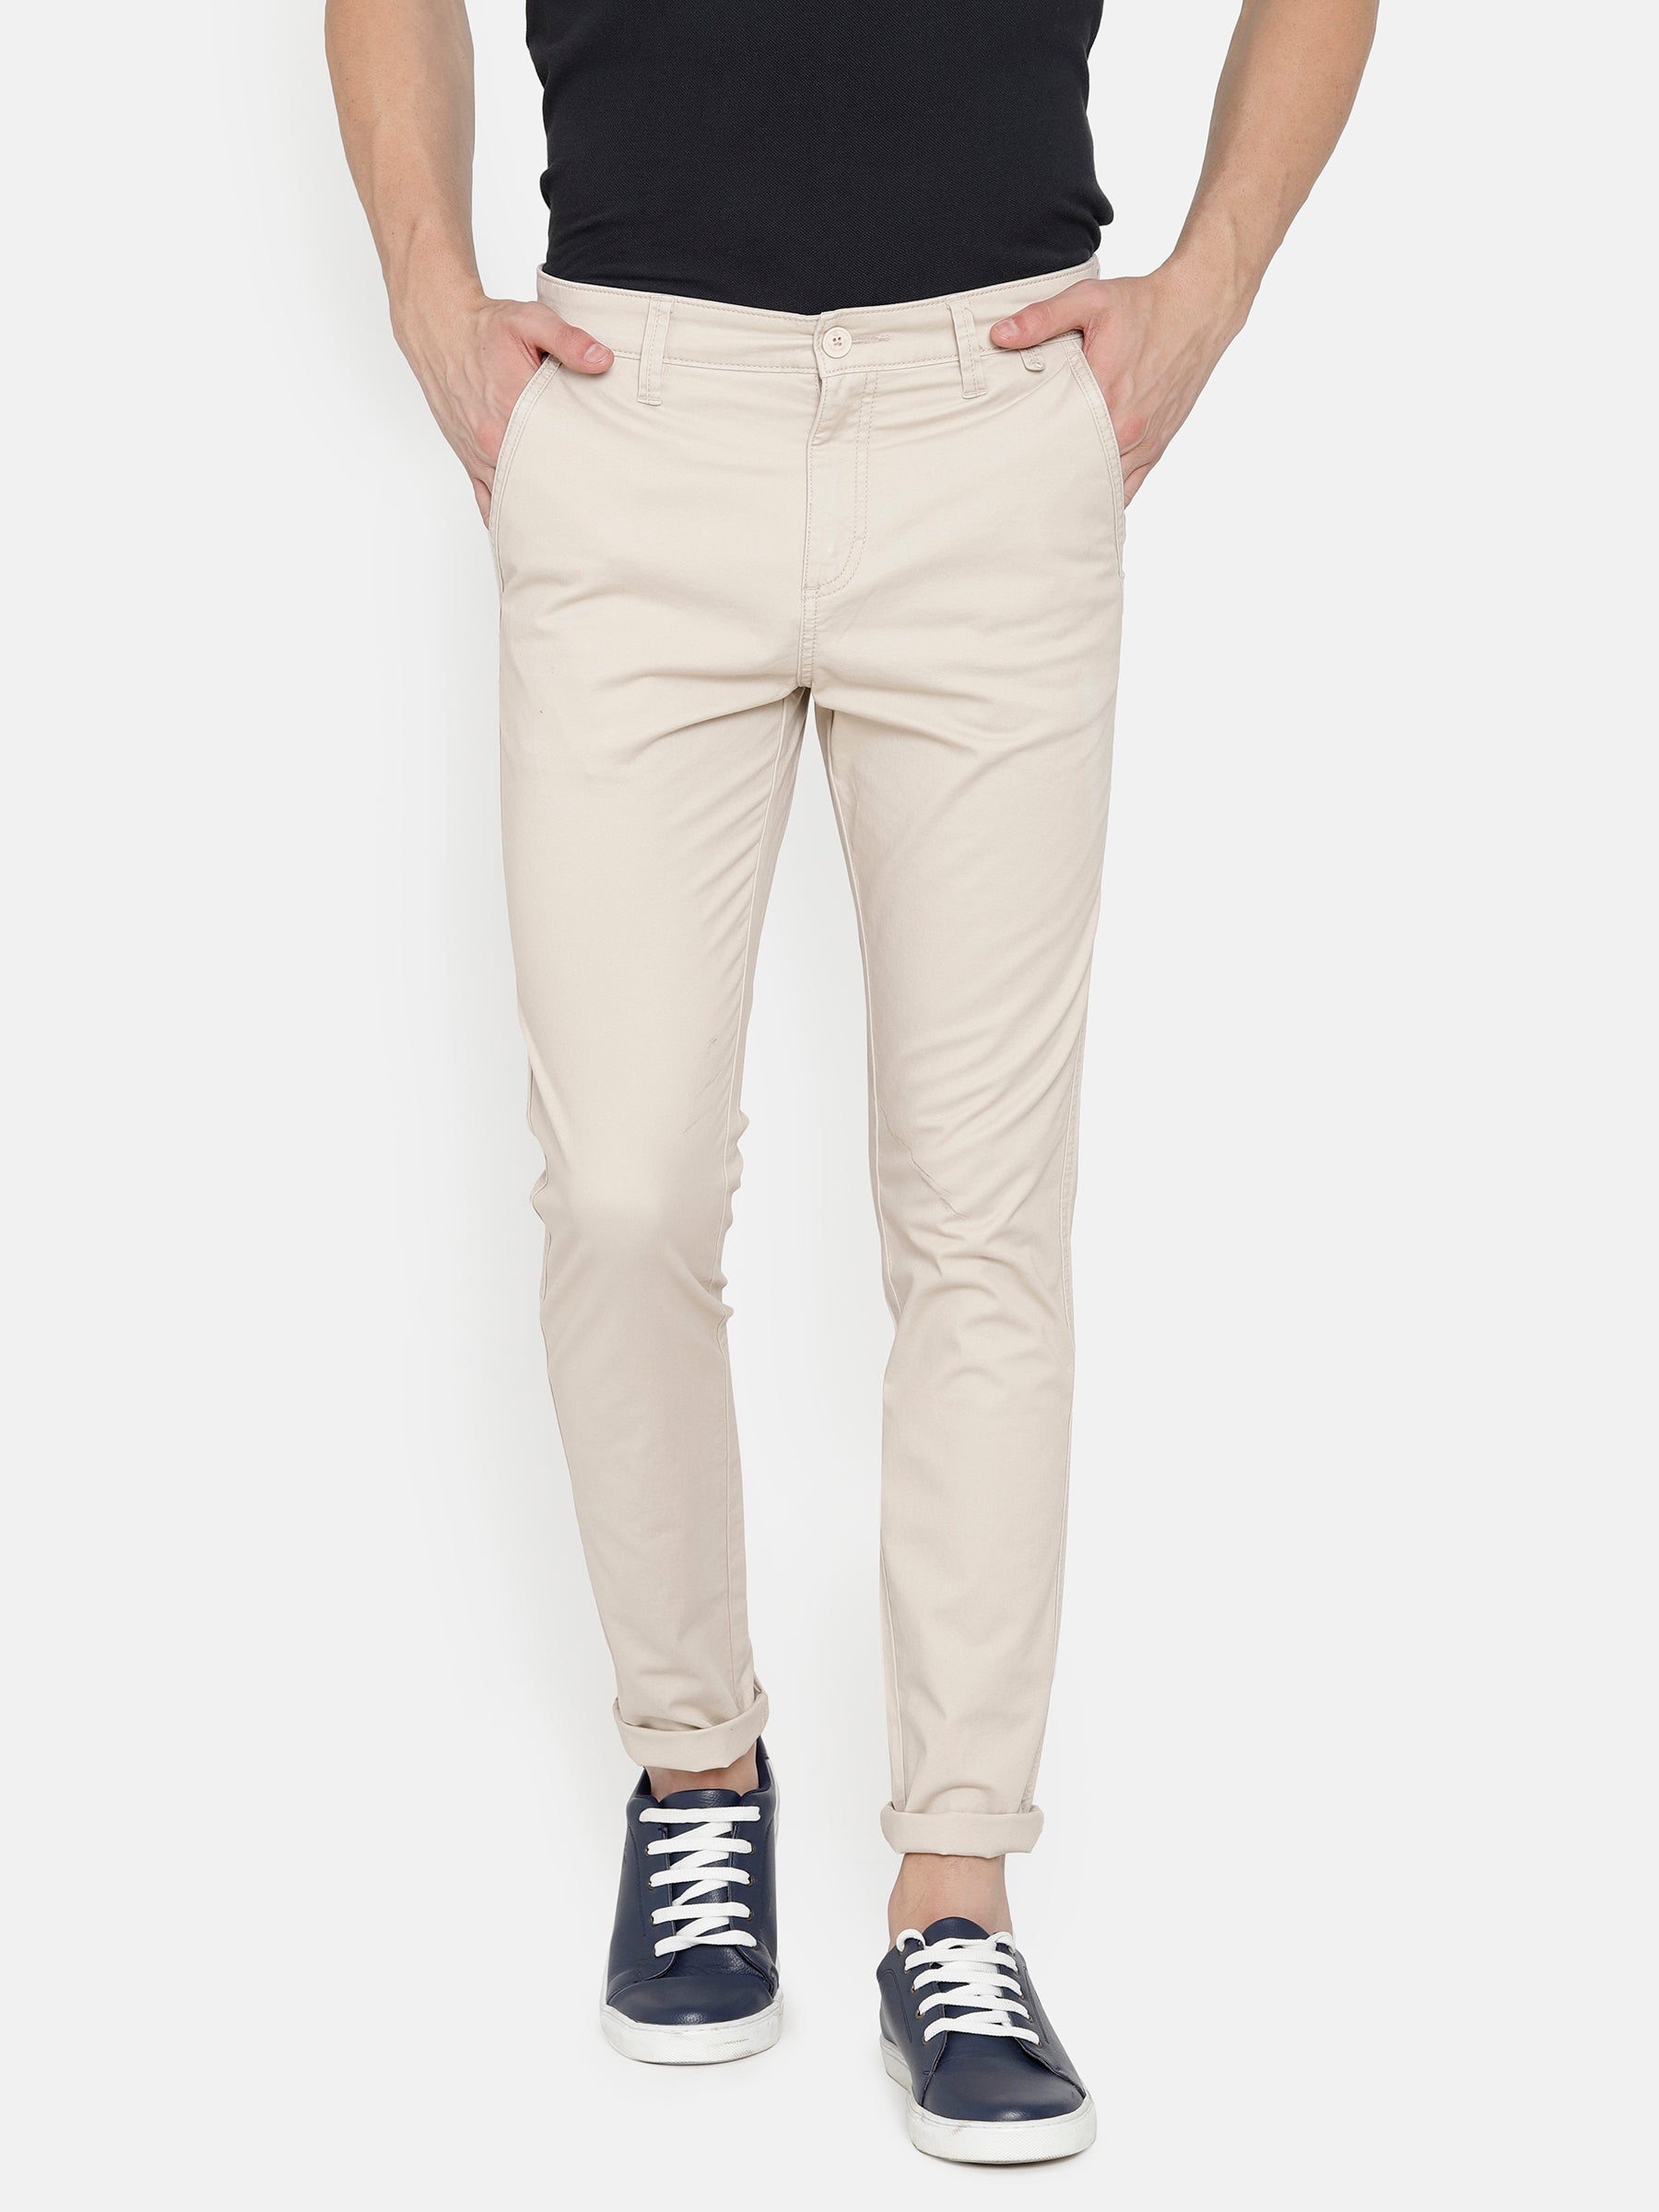 Americanelm MenS Beige Solid Slim Fit Stretchable Formal Trouser